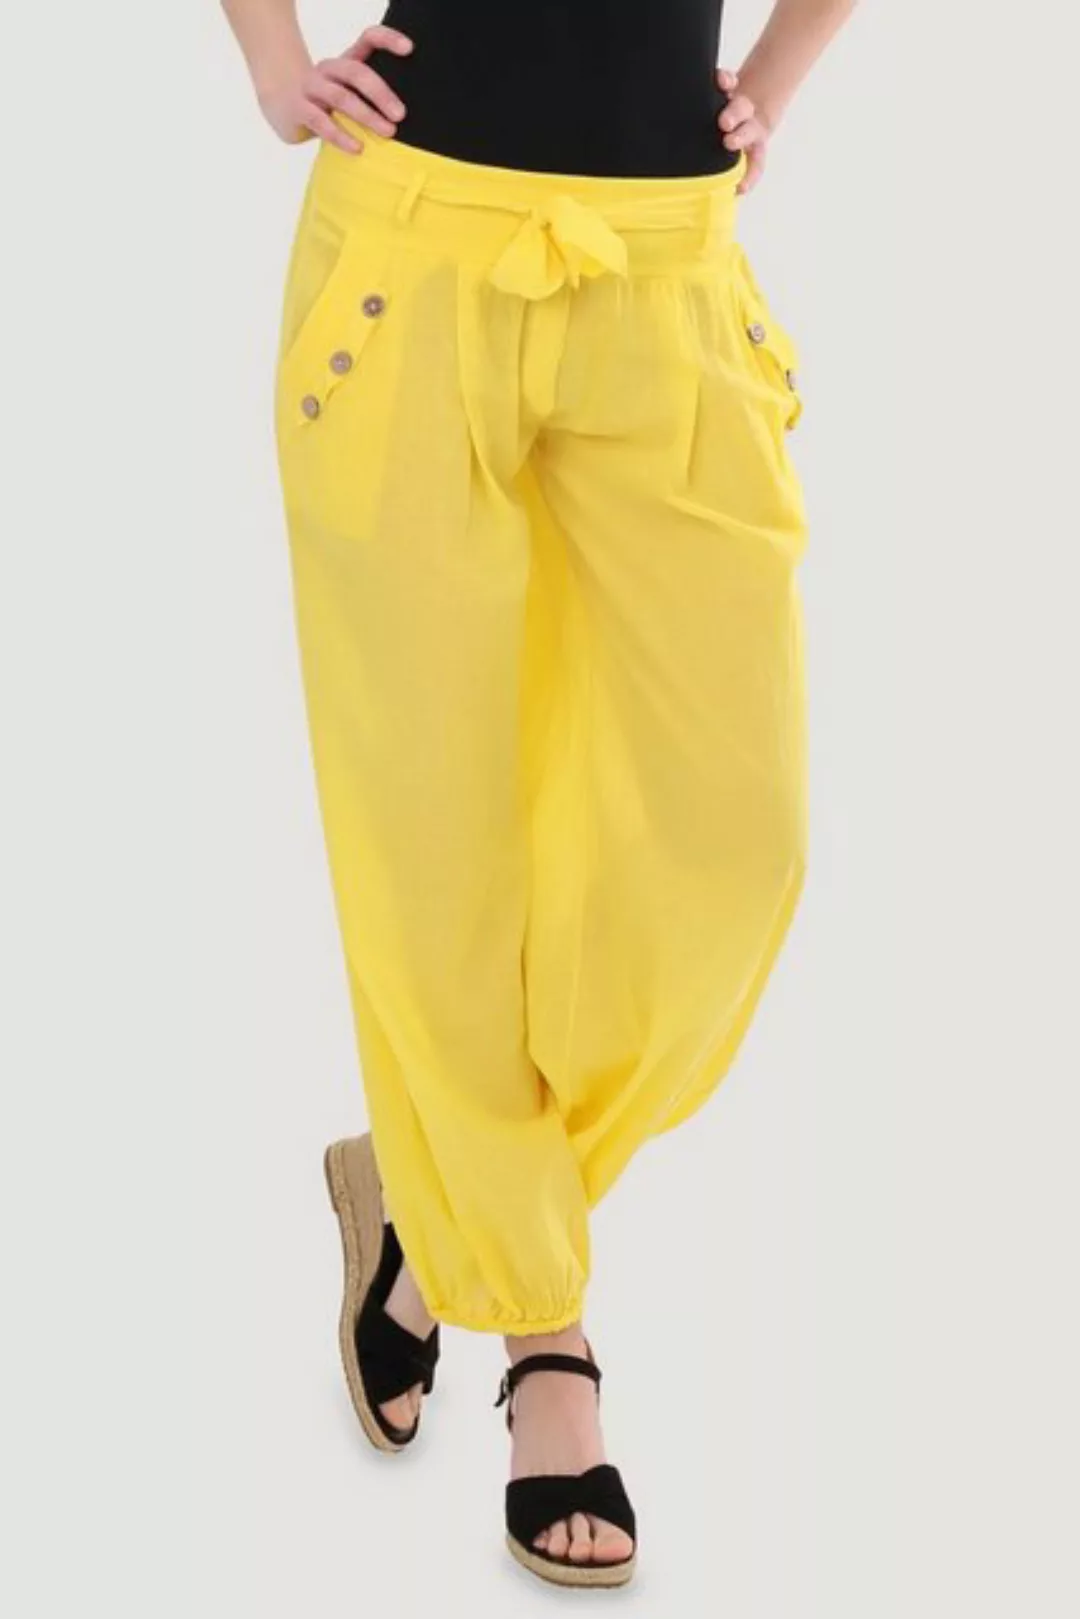 malito more than fashion Haremshose 3418 Aladinhose Sommerhose mit elastisc günstig online kaufen